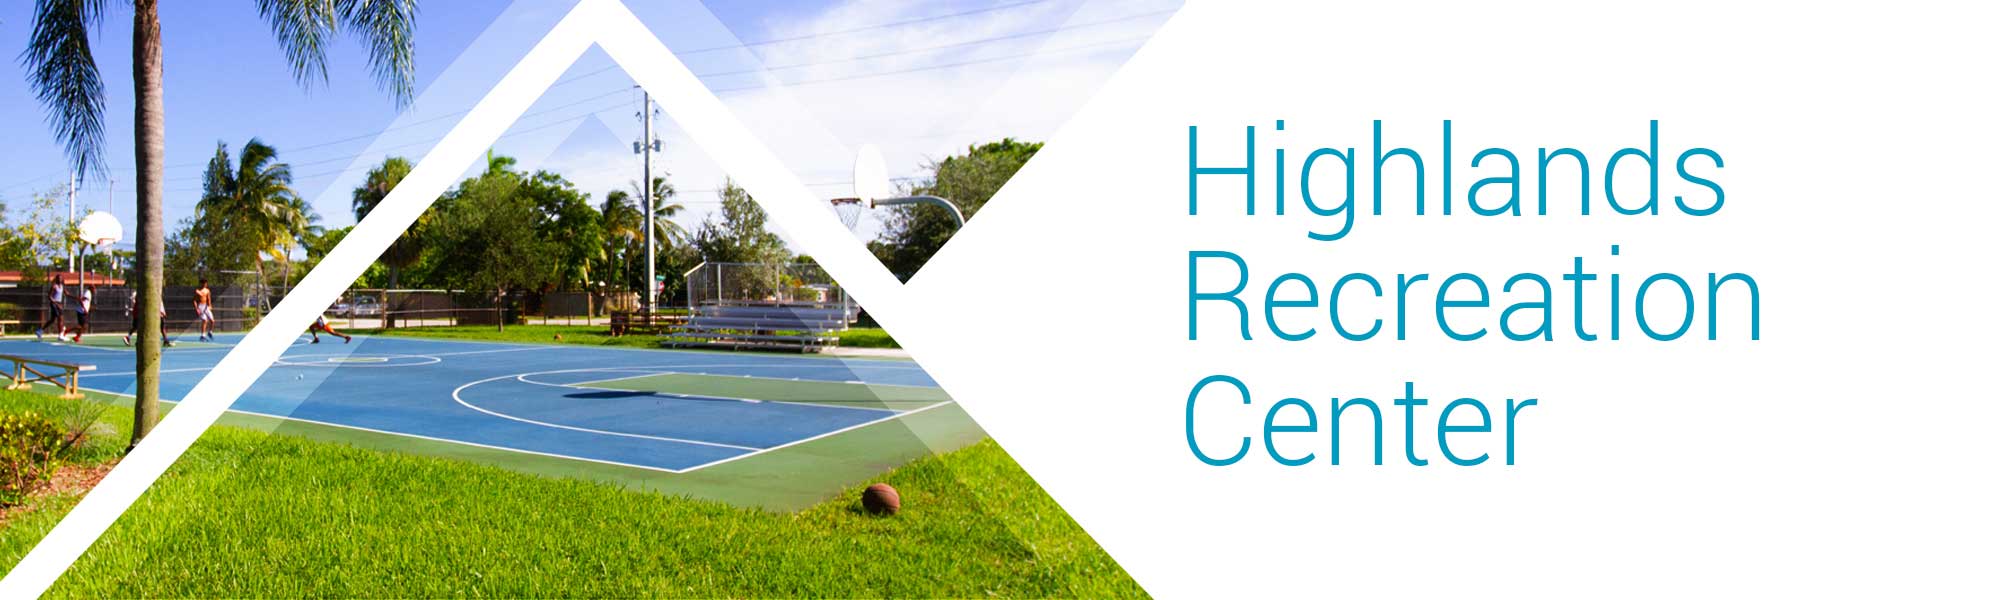 Highlands Recreation Center